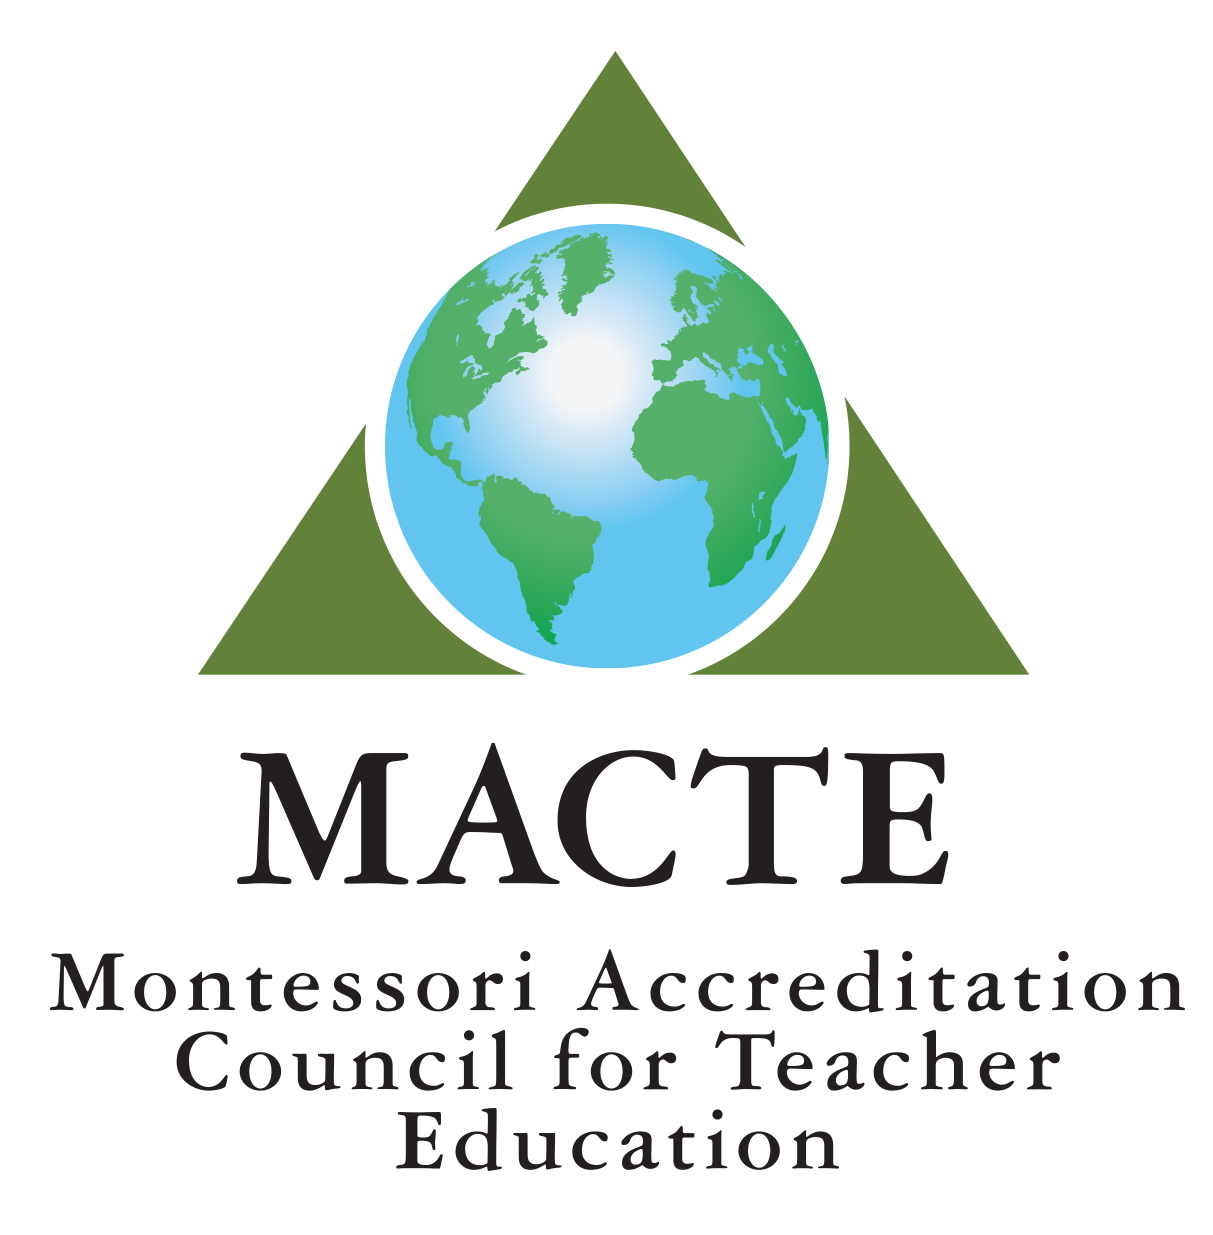 Modern Montessori accreditation